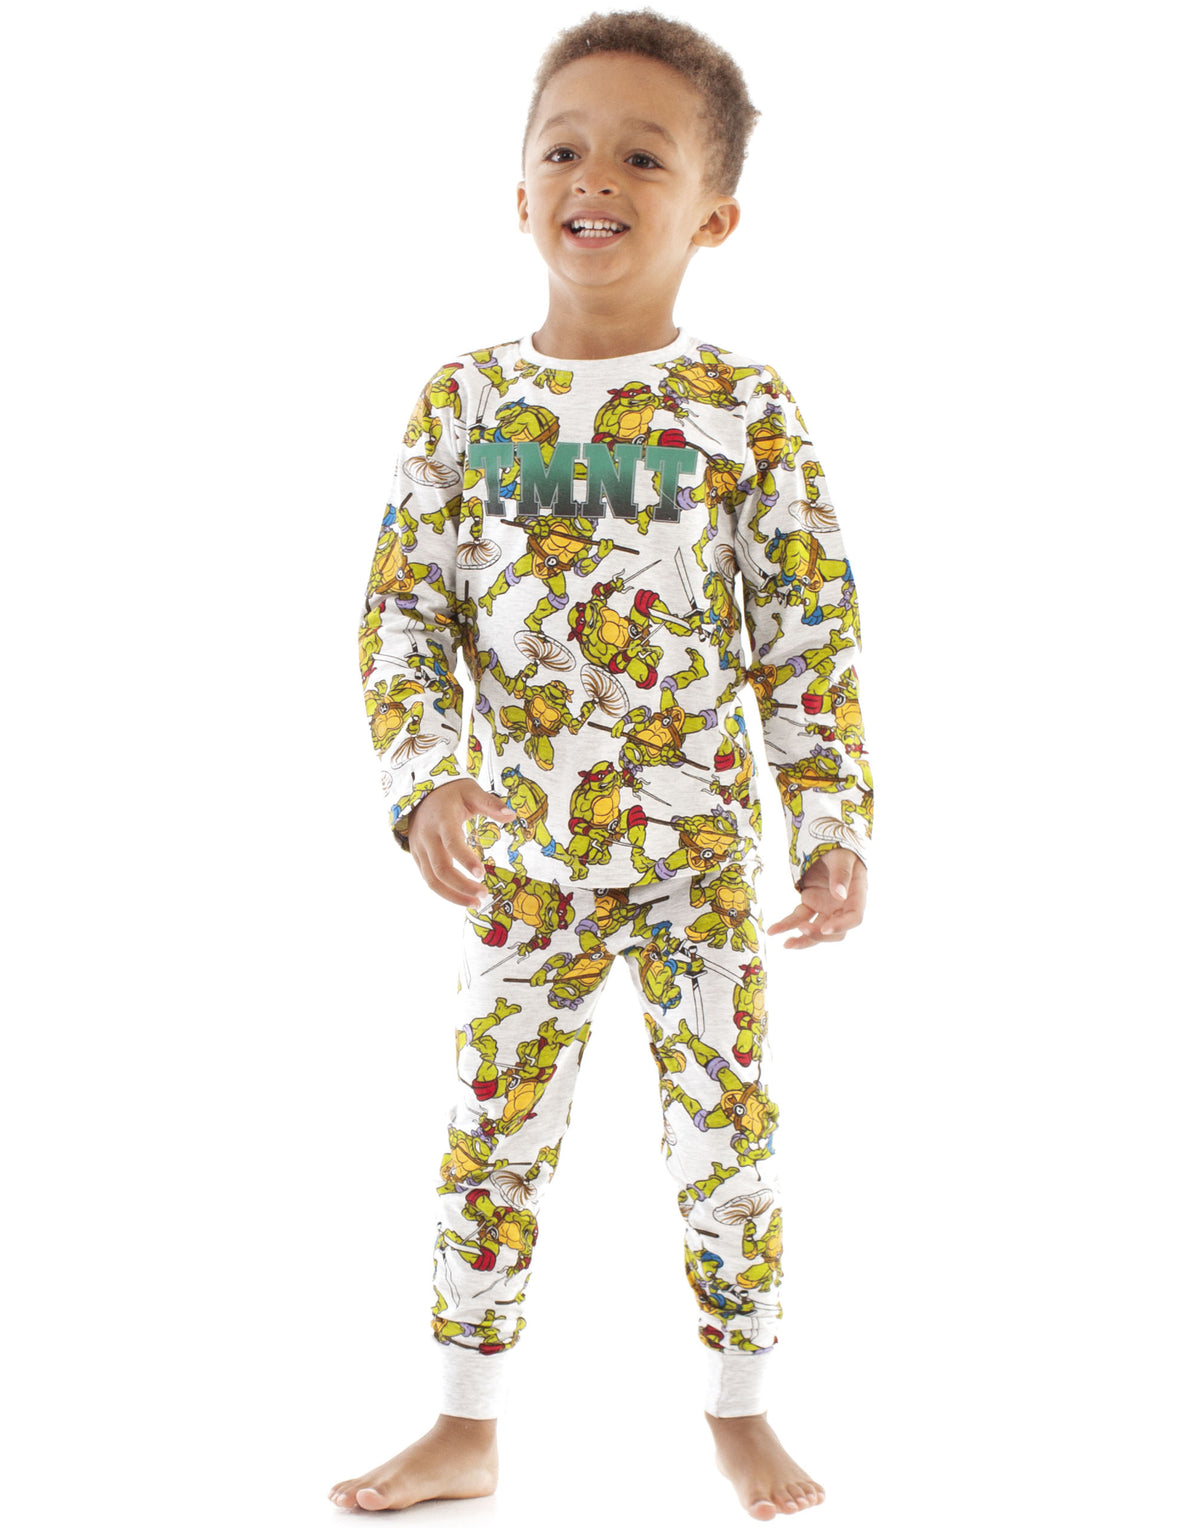 Kids Ninja Turtle and Toy Story 2 piece pajama sets Size 4